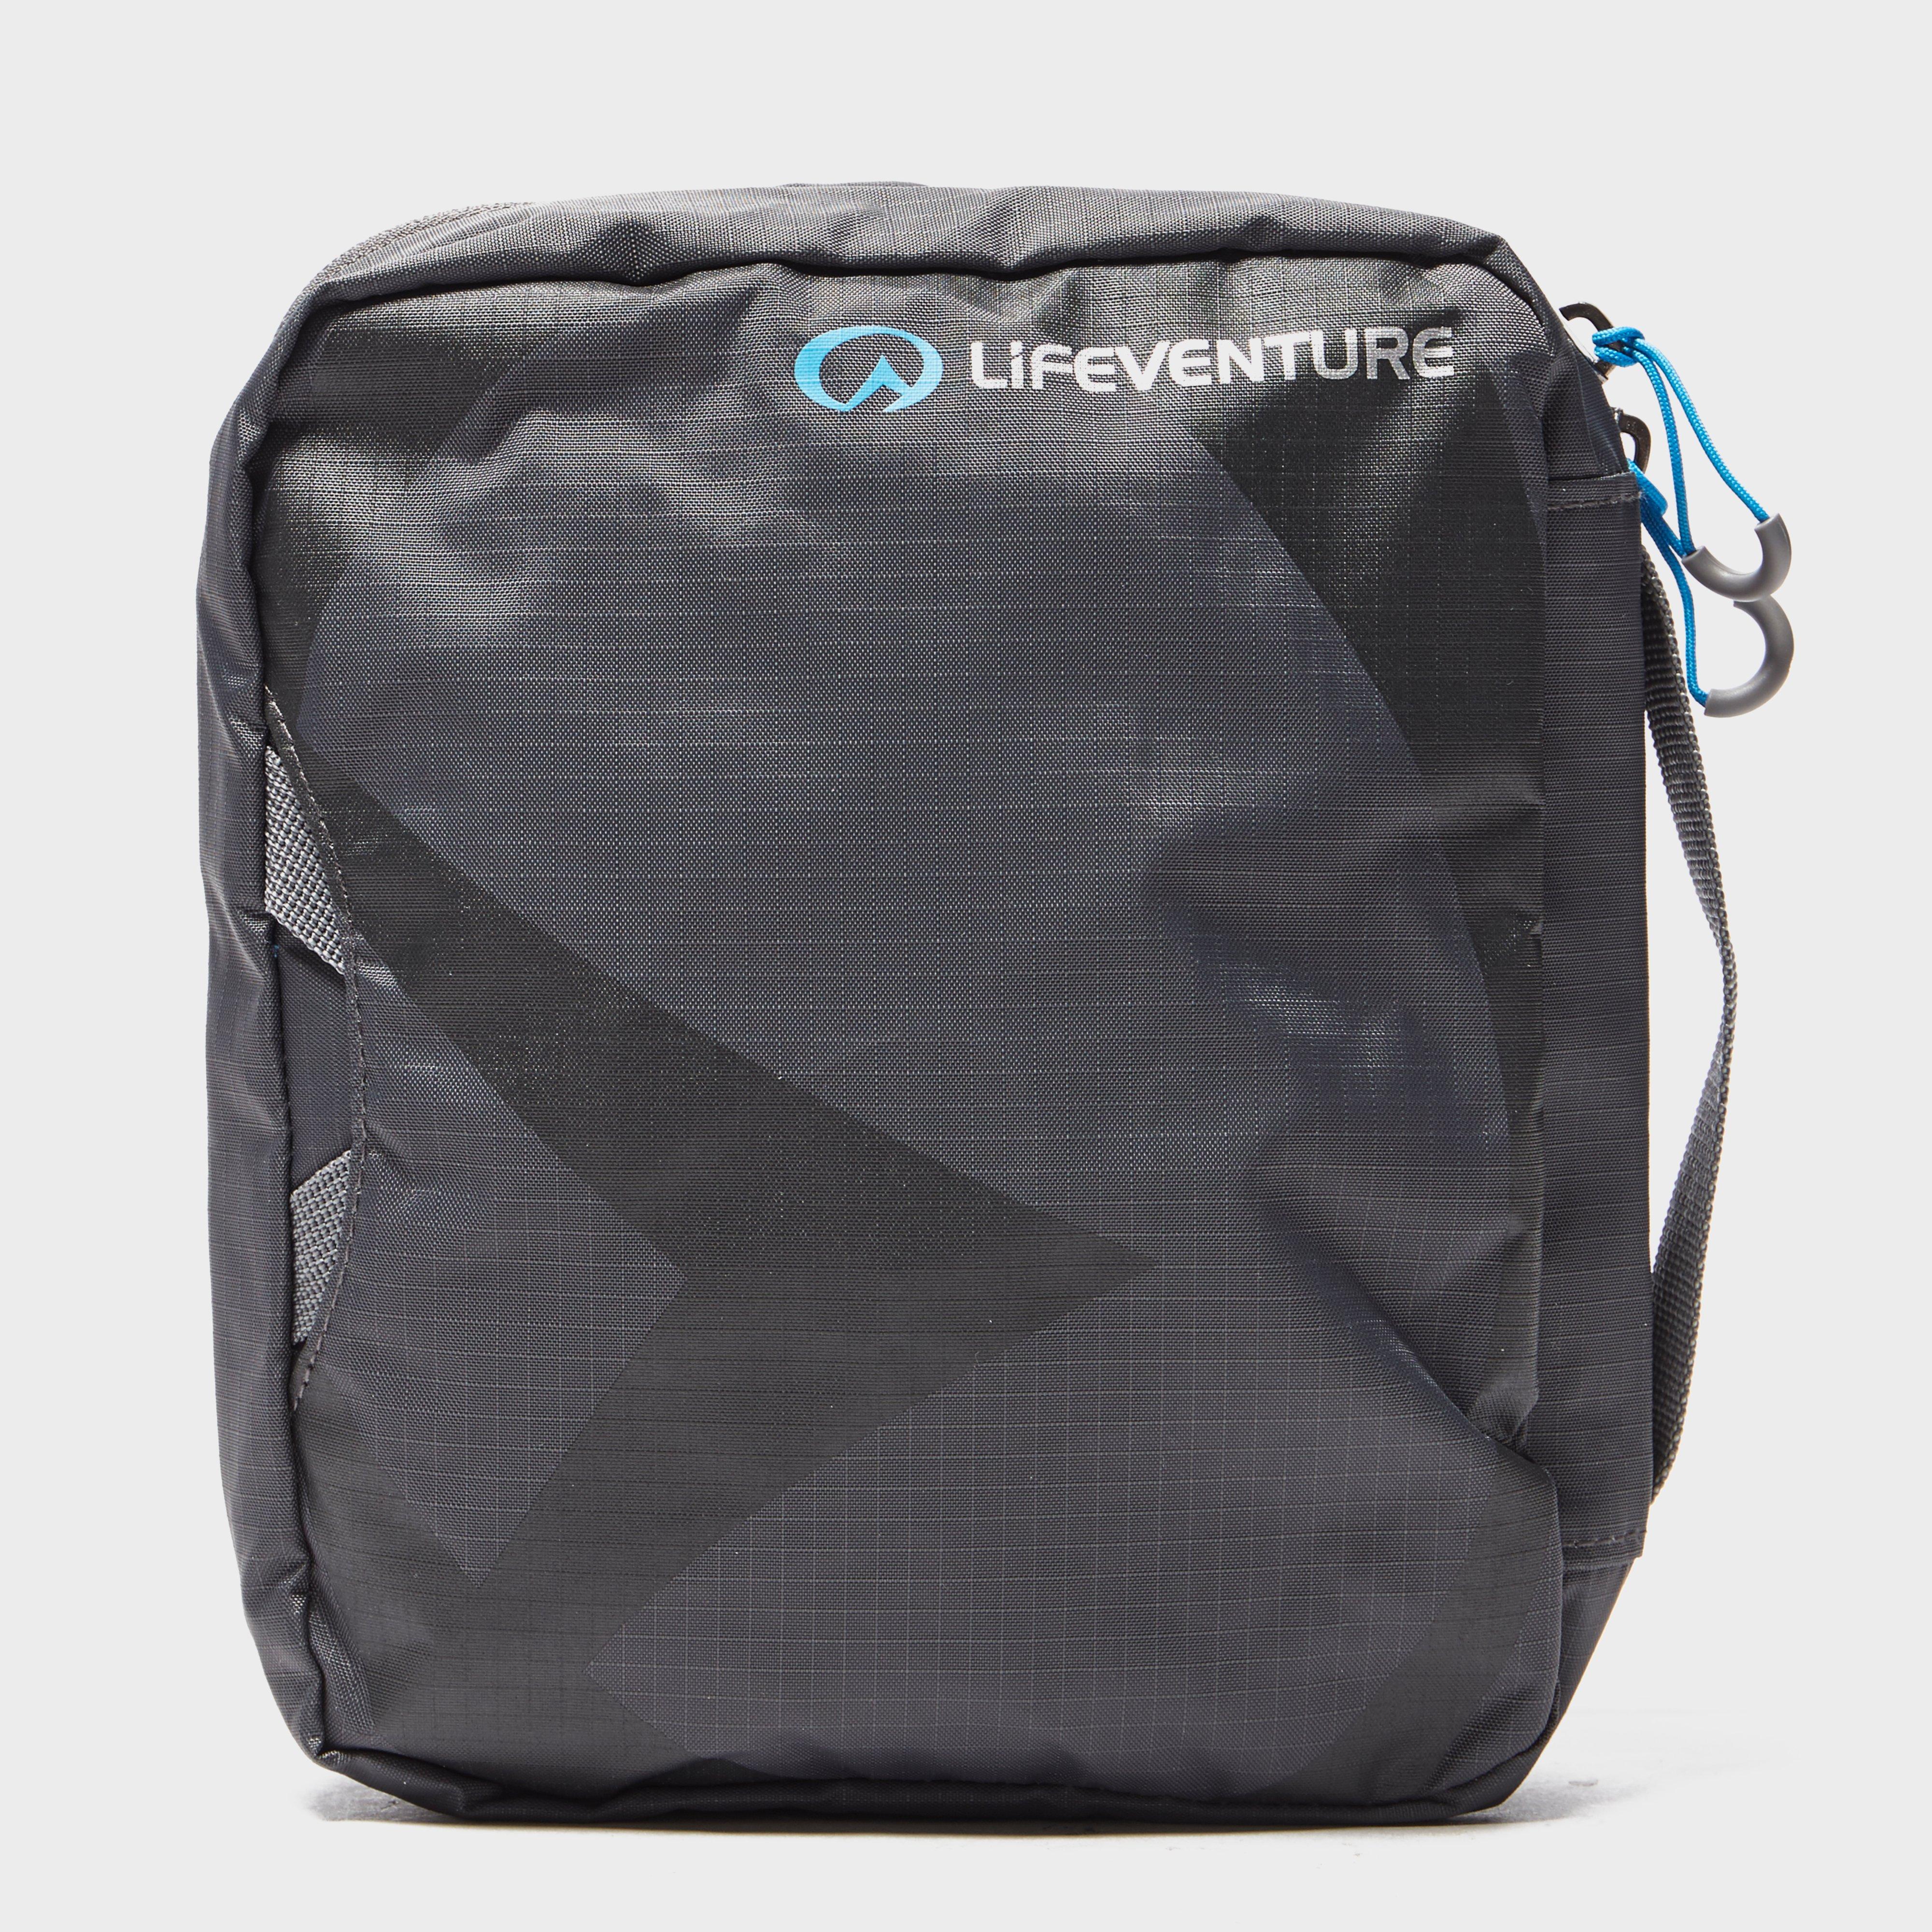 Lifeventure Travel Wash Bag (large) - Grey  Grey